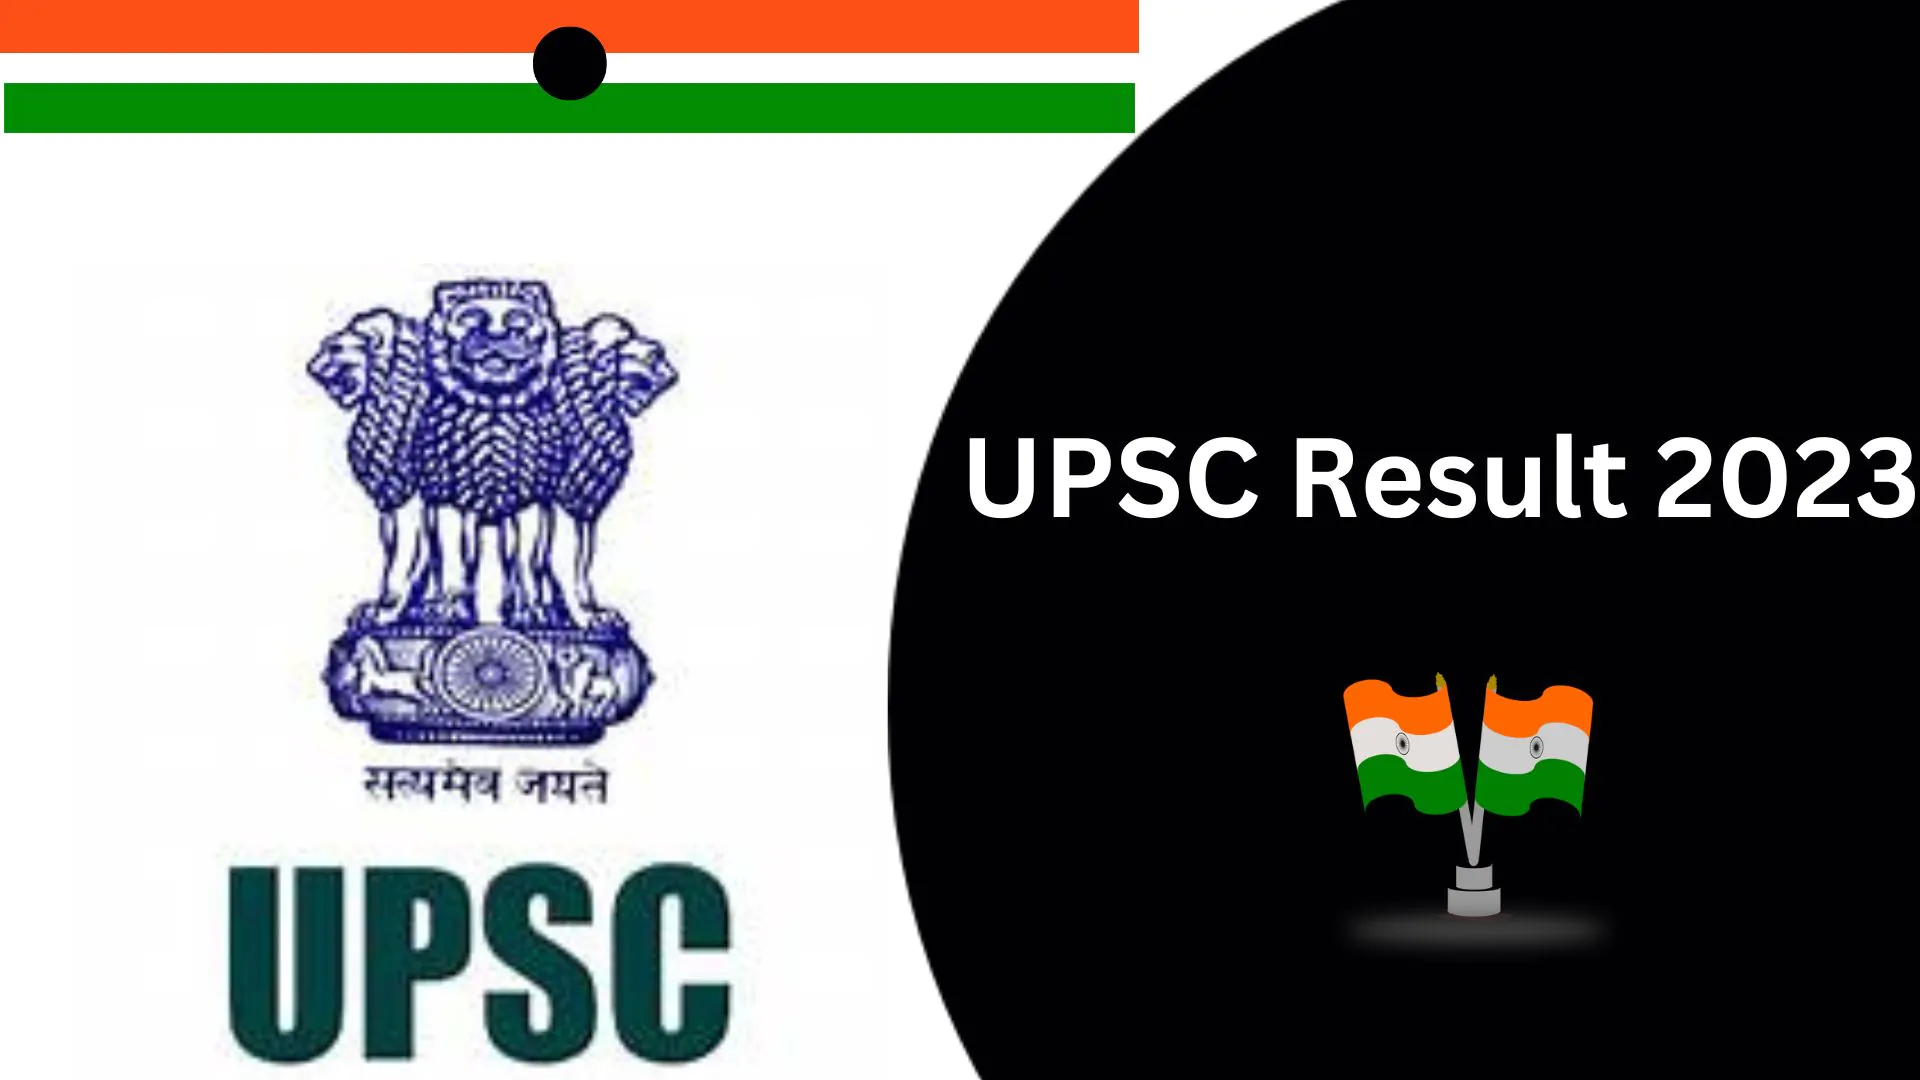 Mission UPSC India